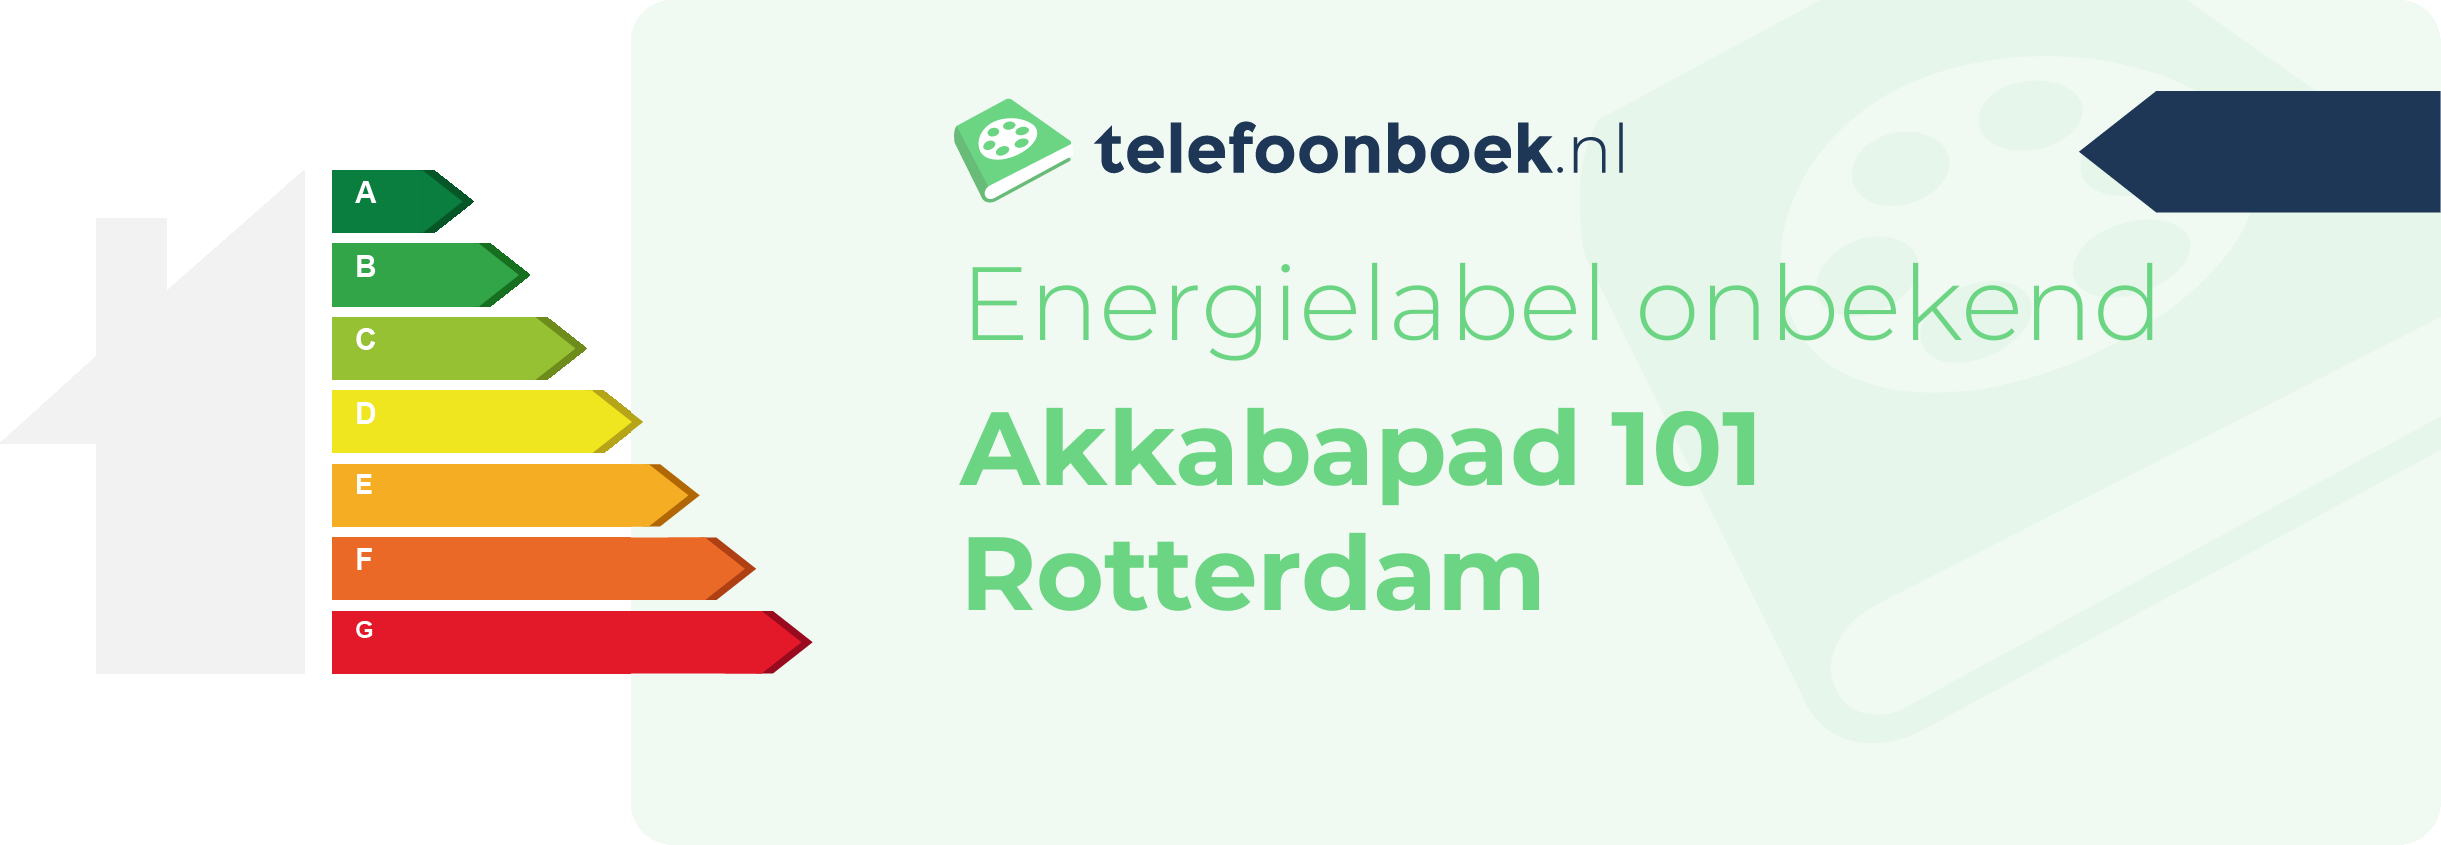 Energielabel Akkabapad 101 Rotterdam